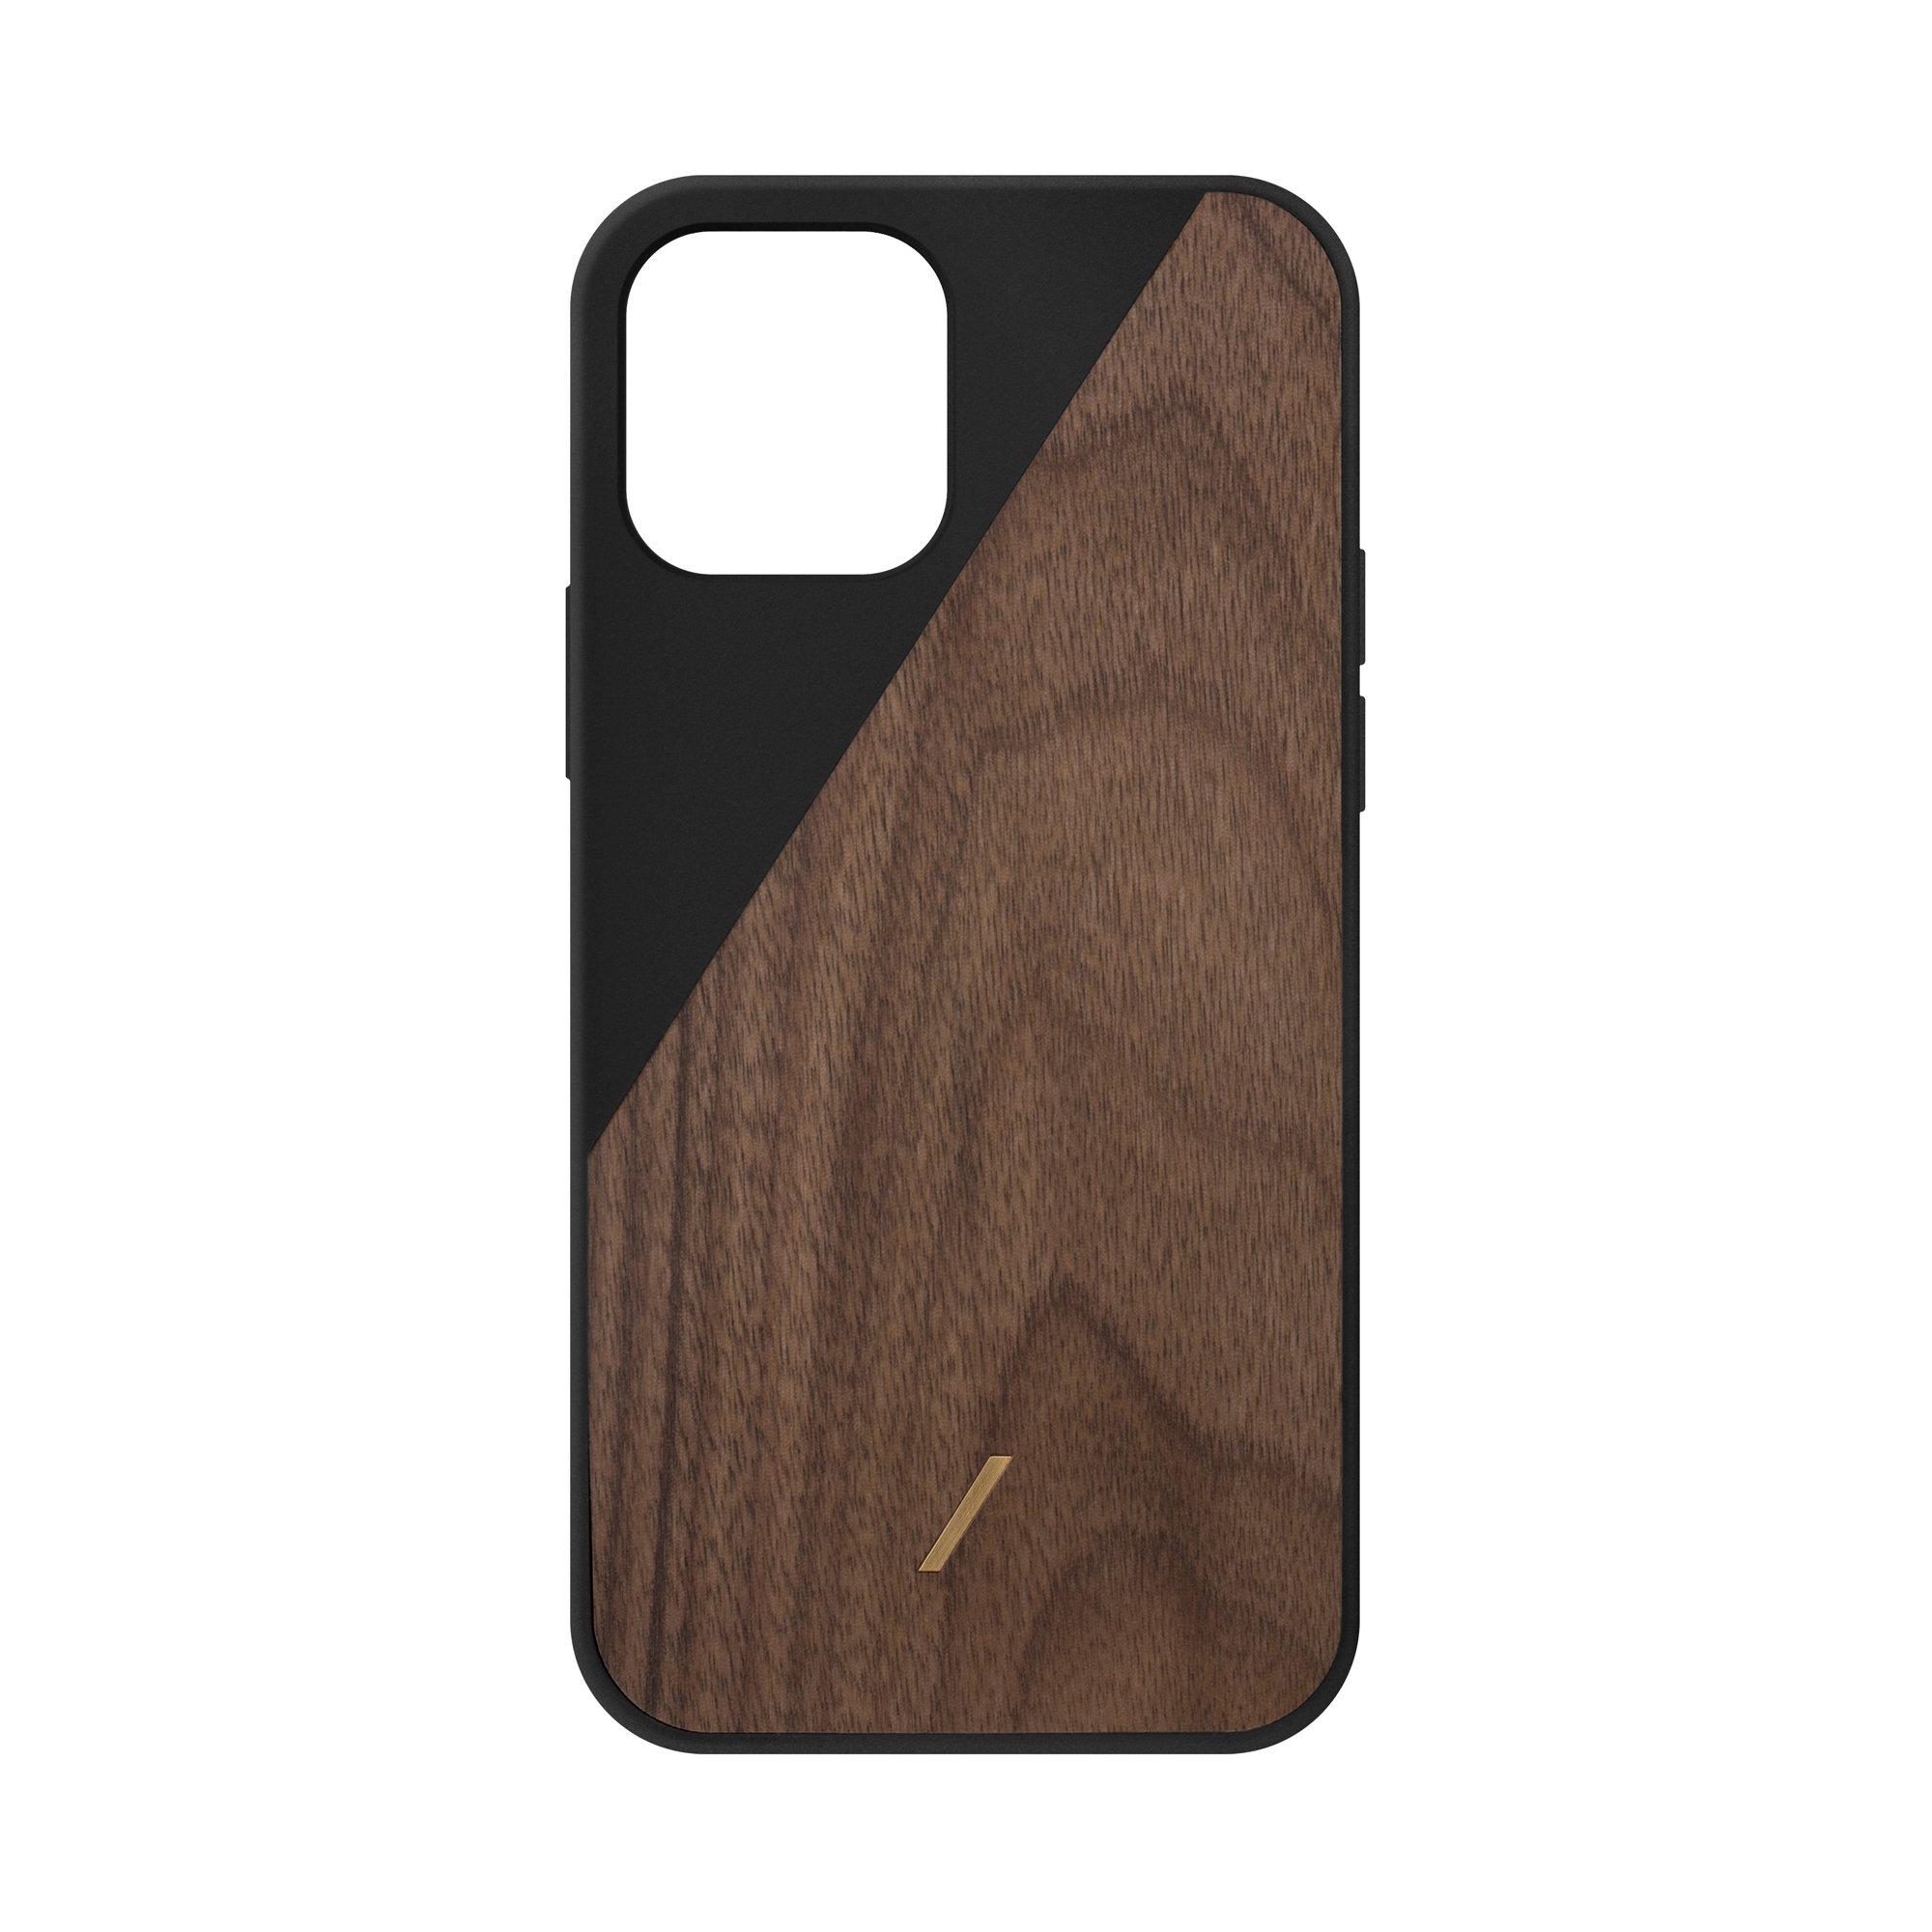 Image of NATIVE UNION Clic Wooden (iPhone 12 Pro Max) Hardcase für Smartphone